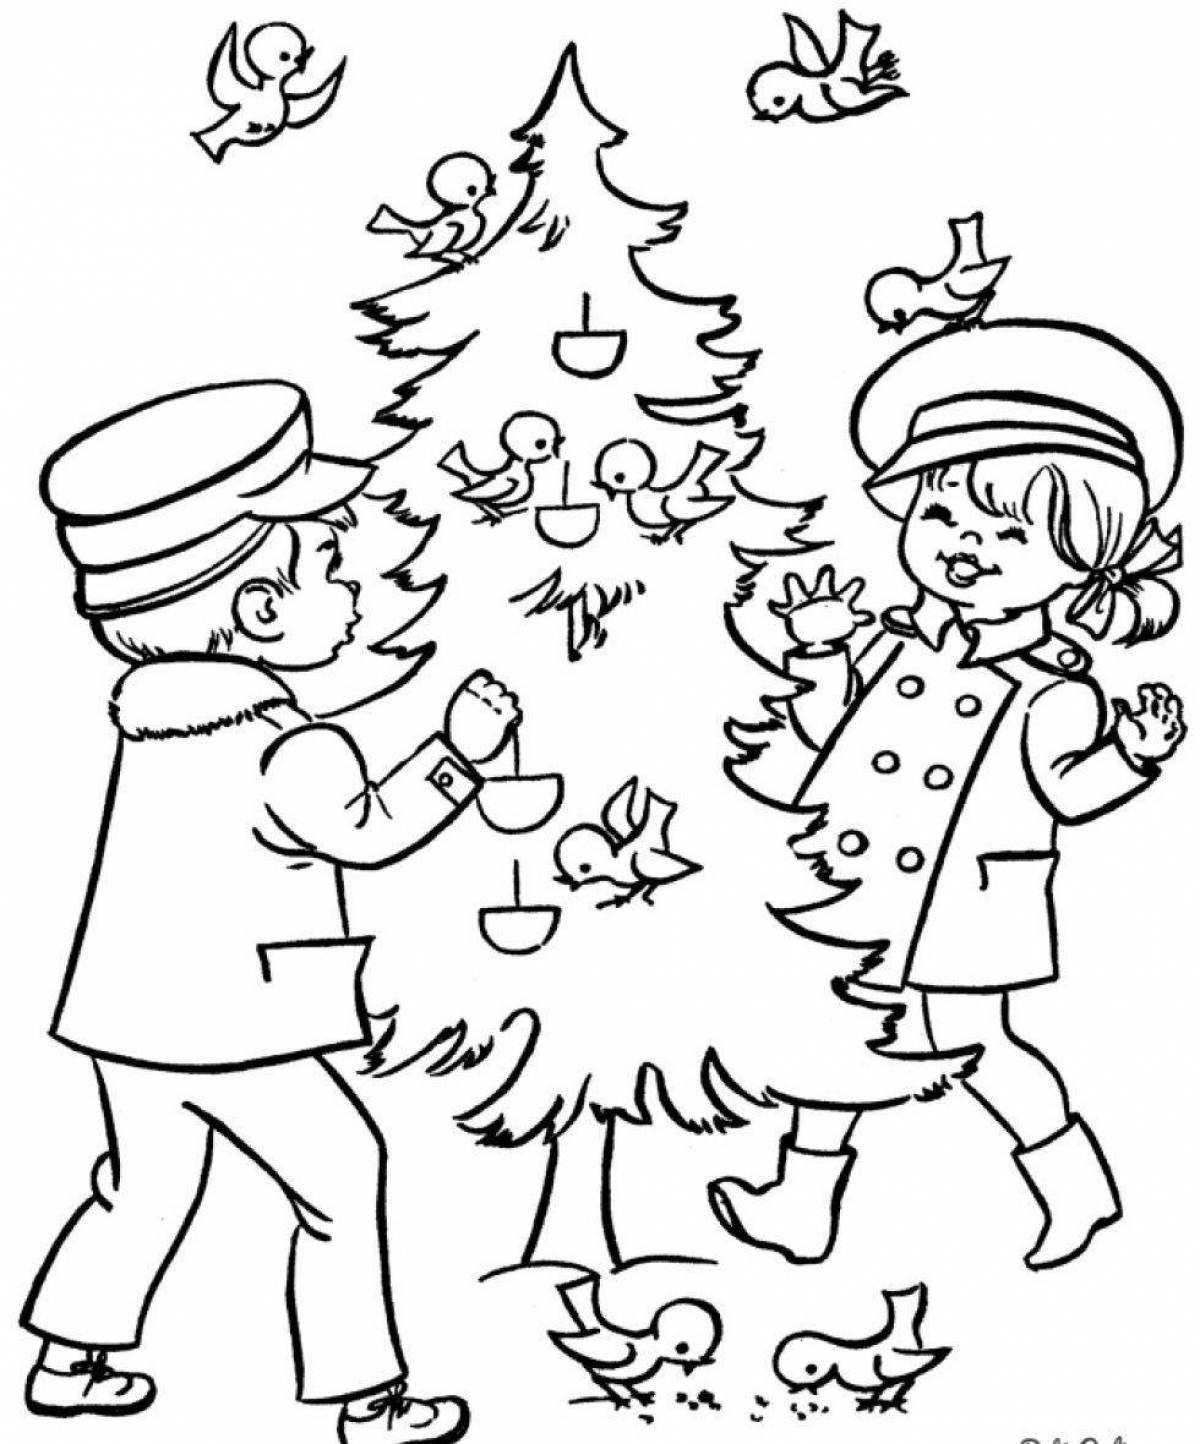 Children decorating the Christmas tree #5